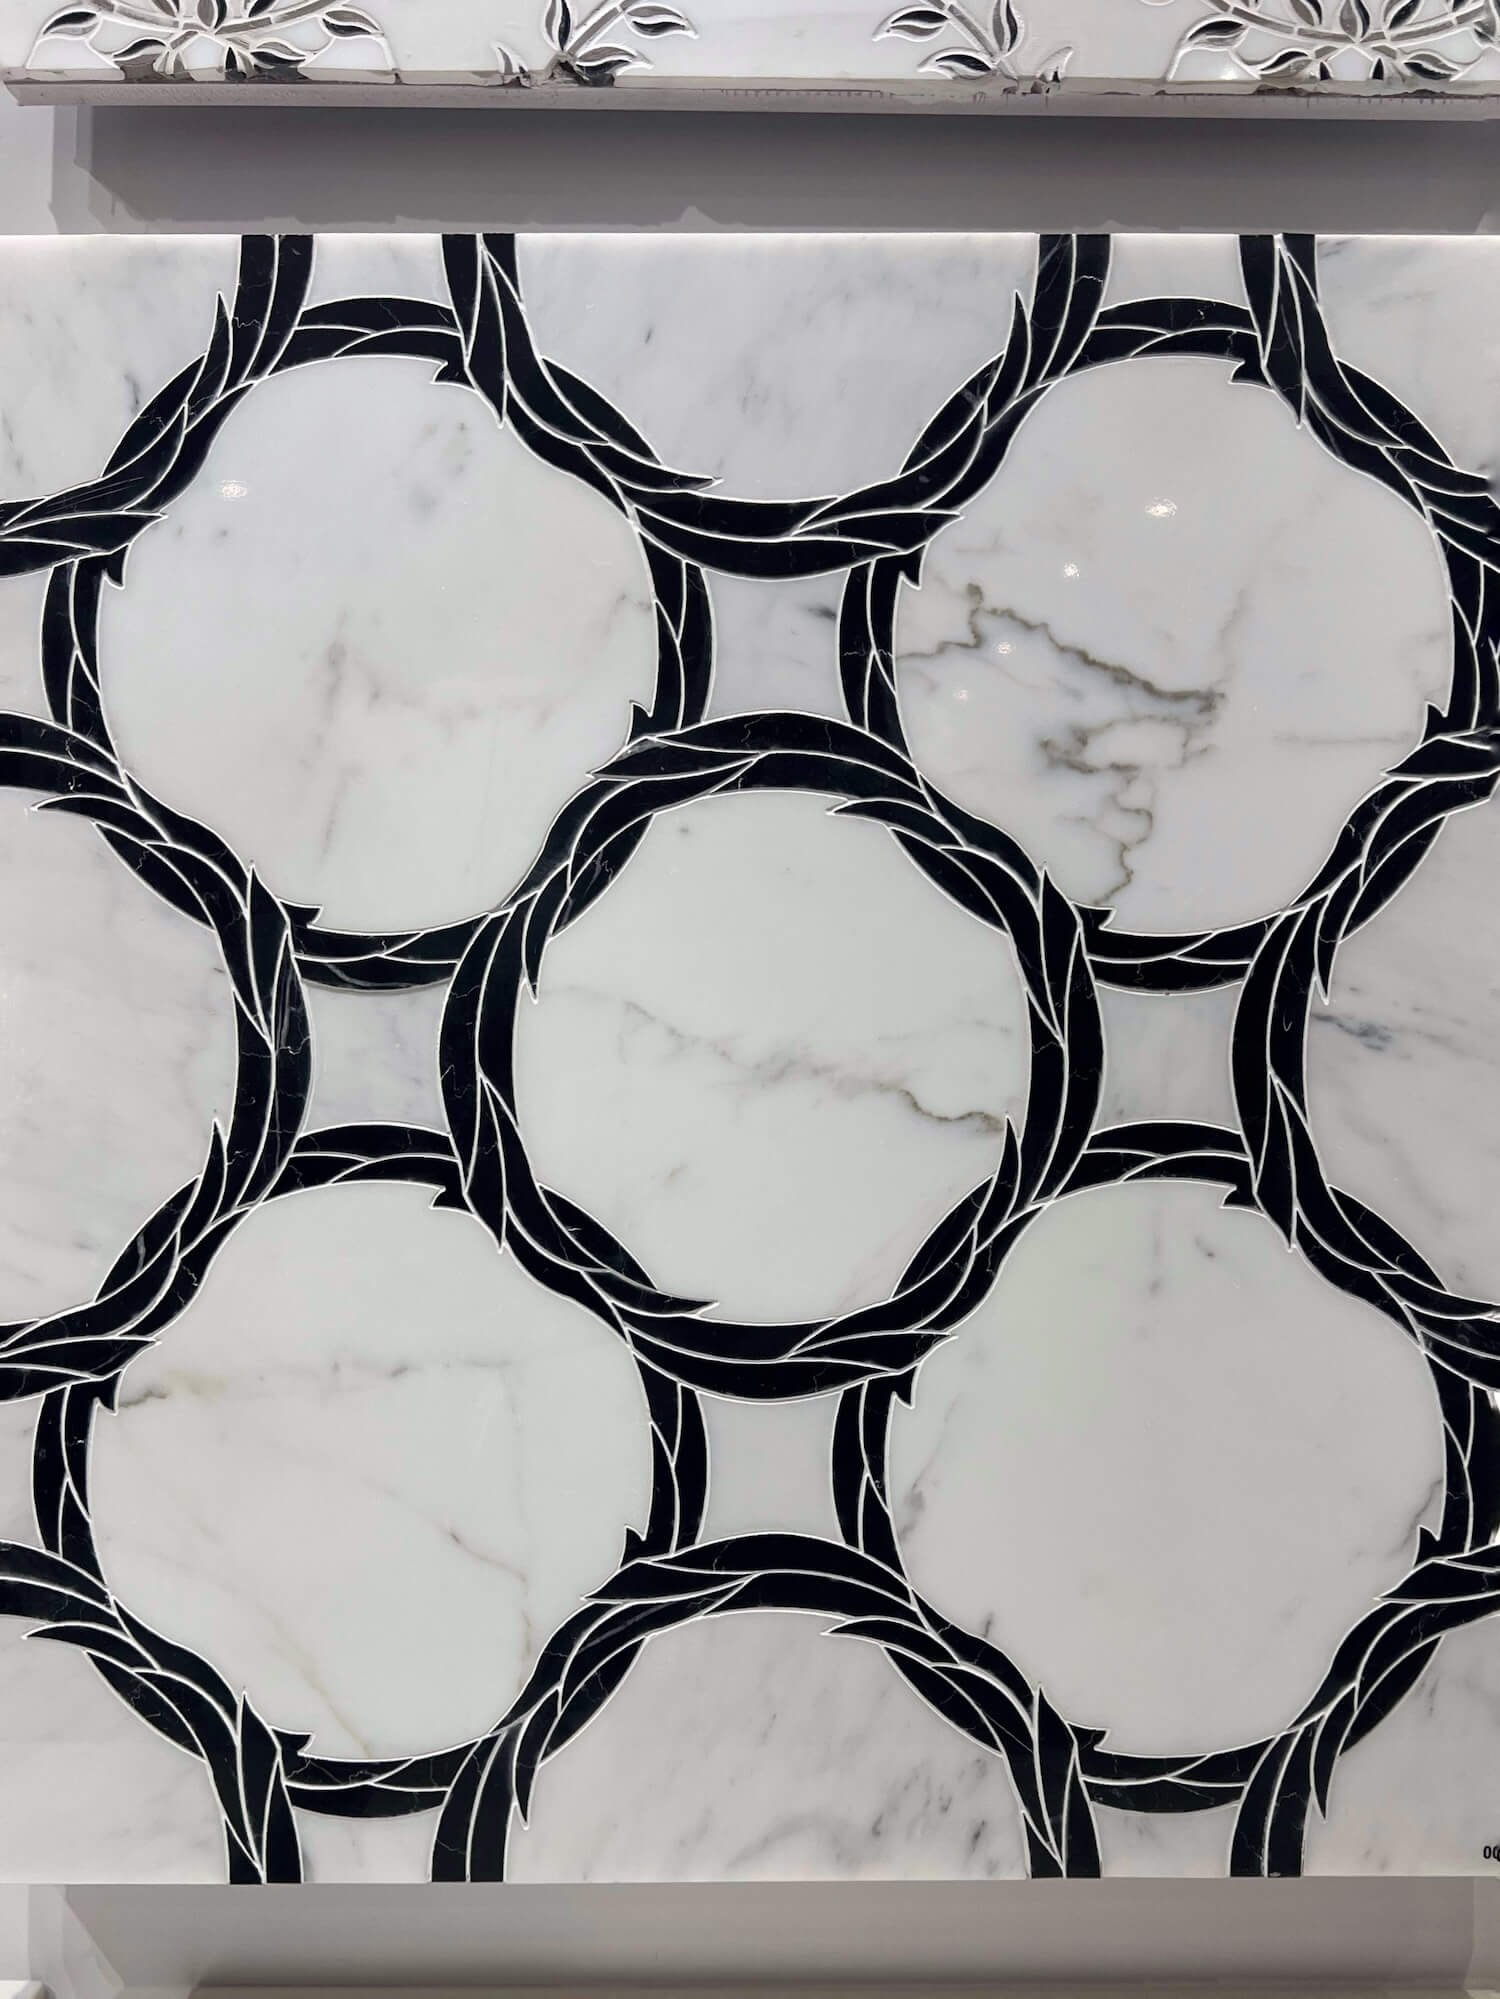 waterjet black and white leaf ring tile.JPG